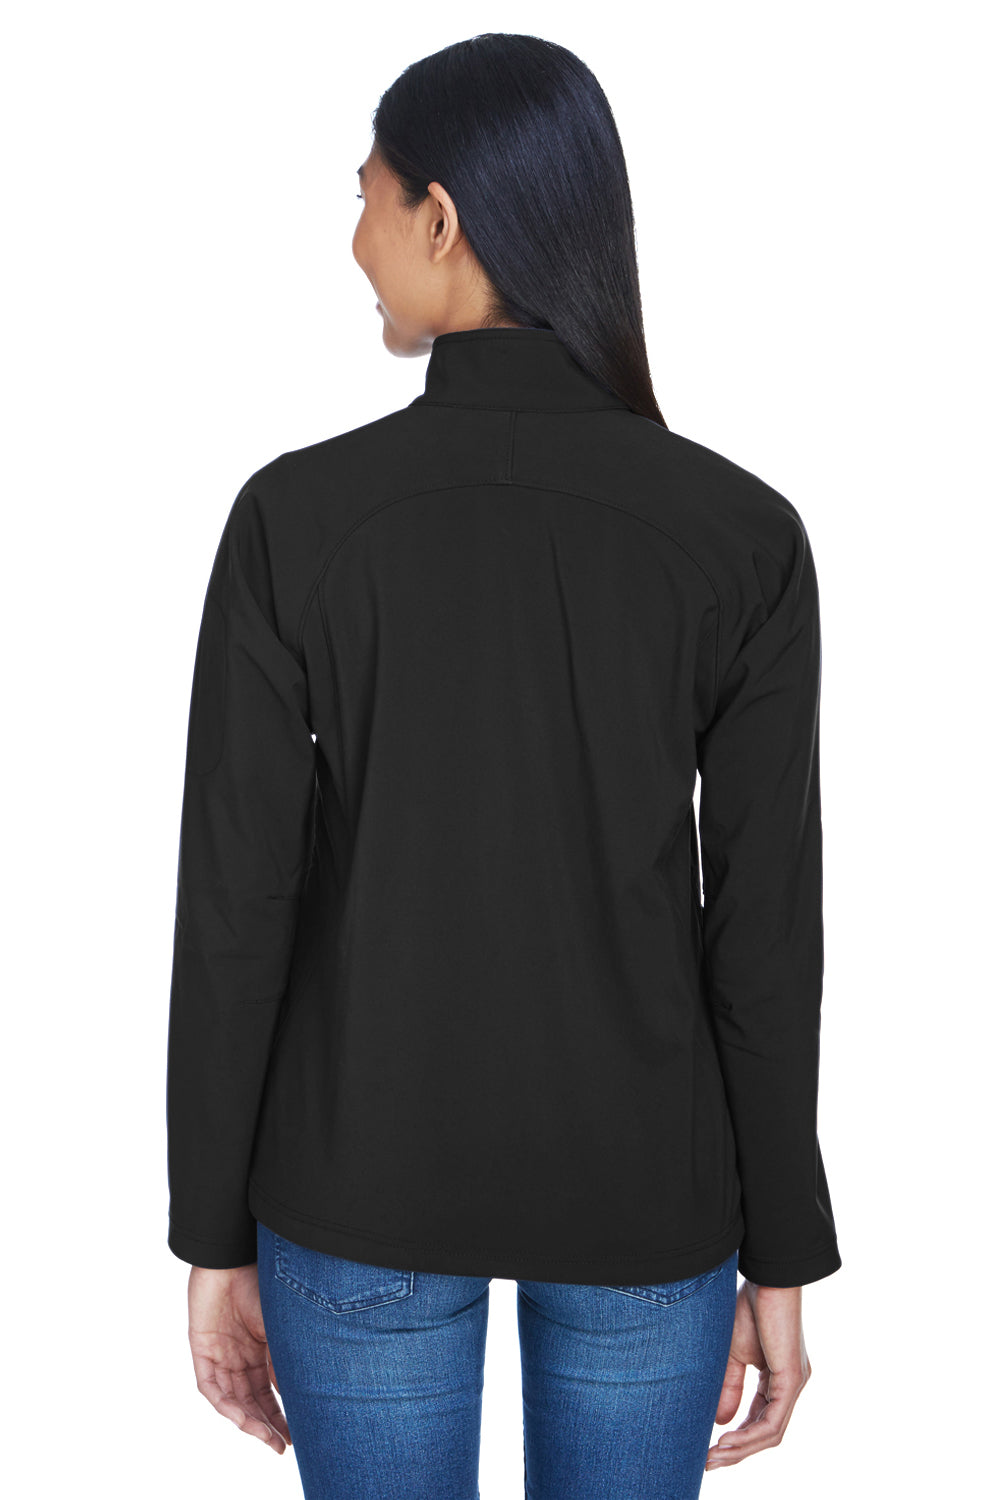 North End 78034 Womens Performance Water Resistant Full Zip Jacket Black Back